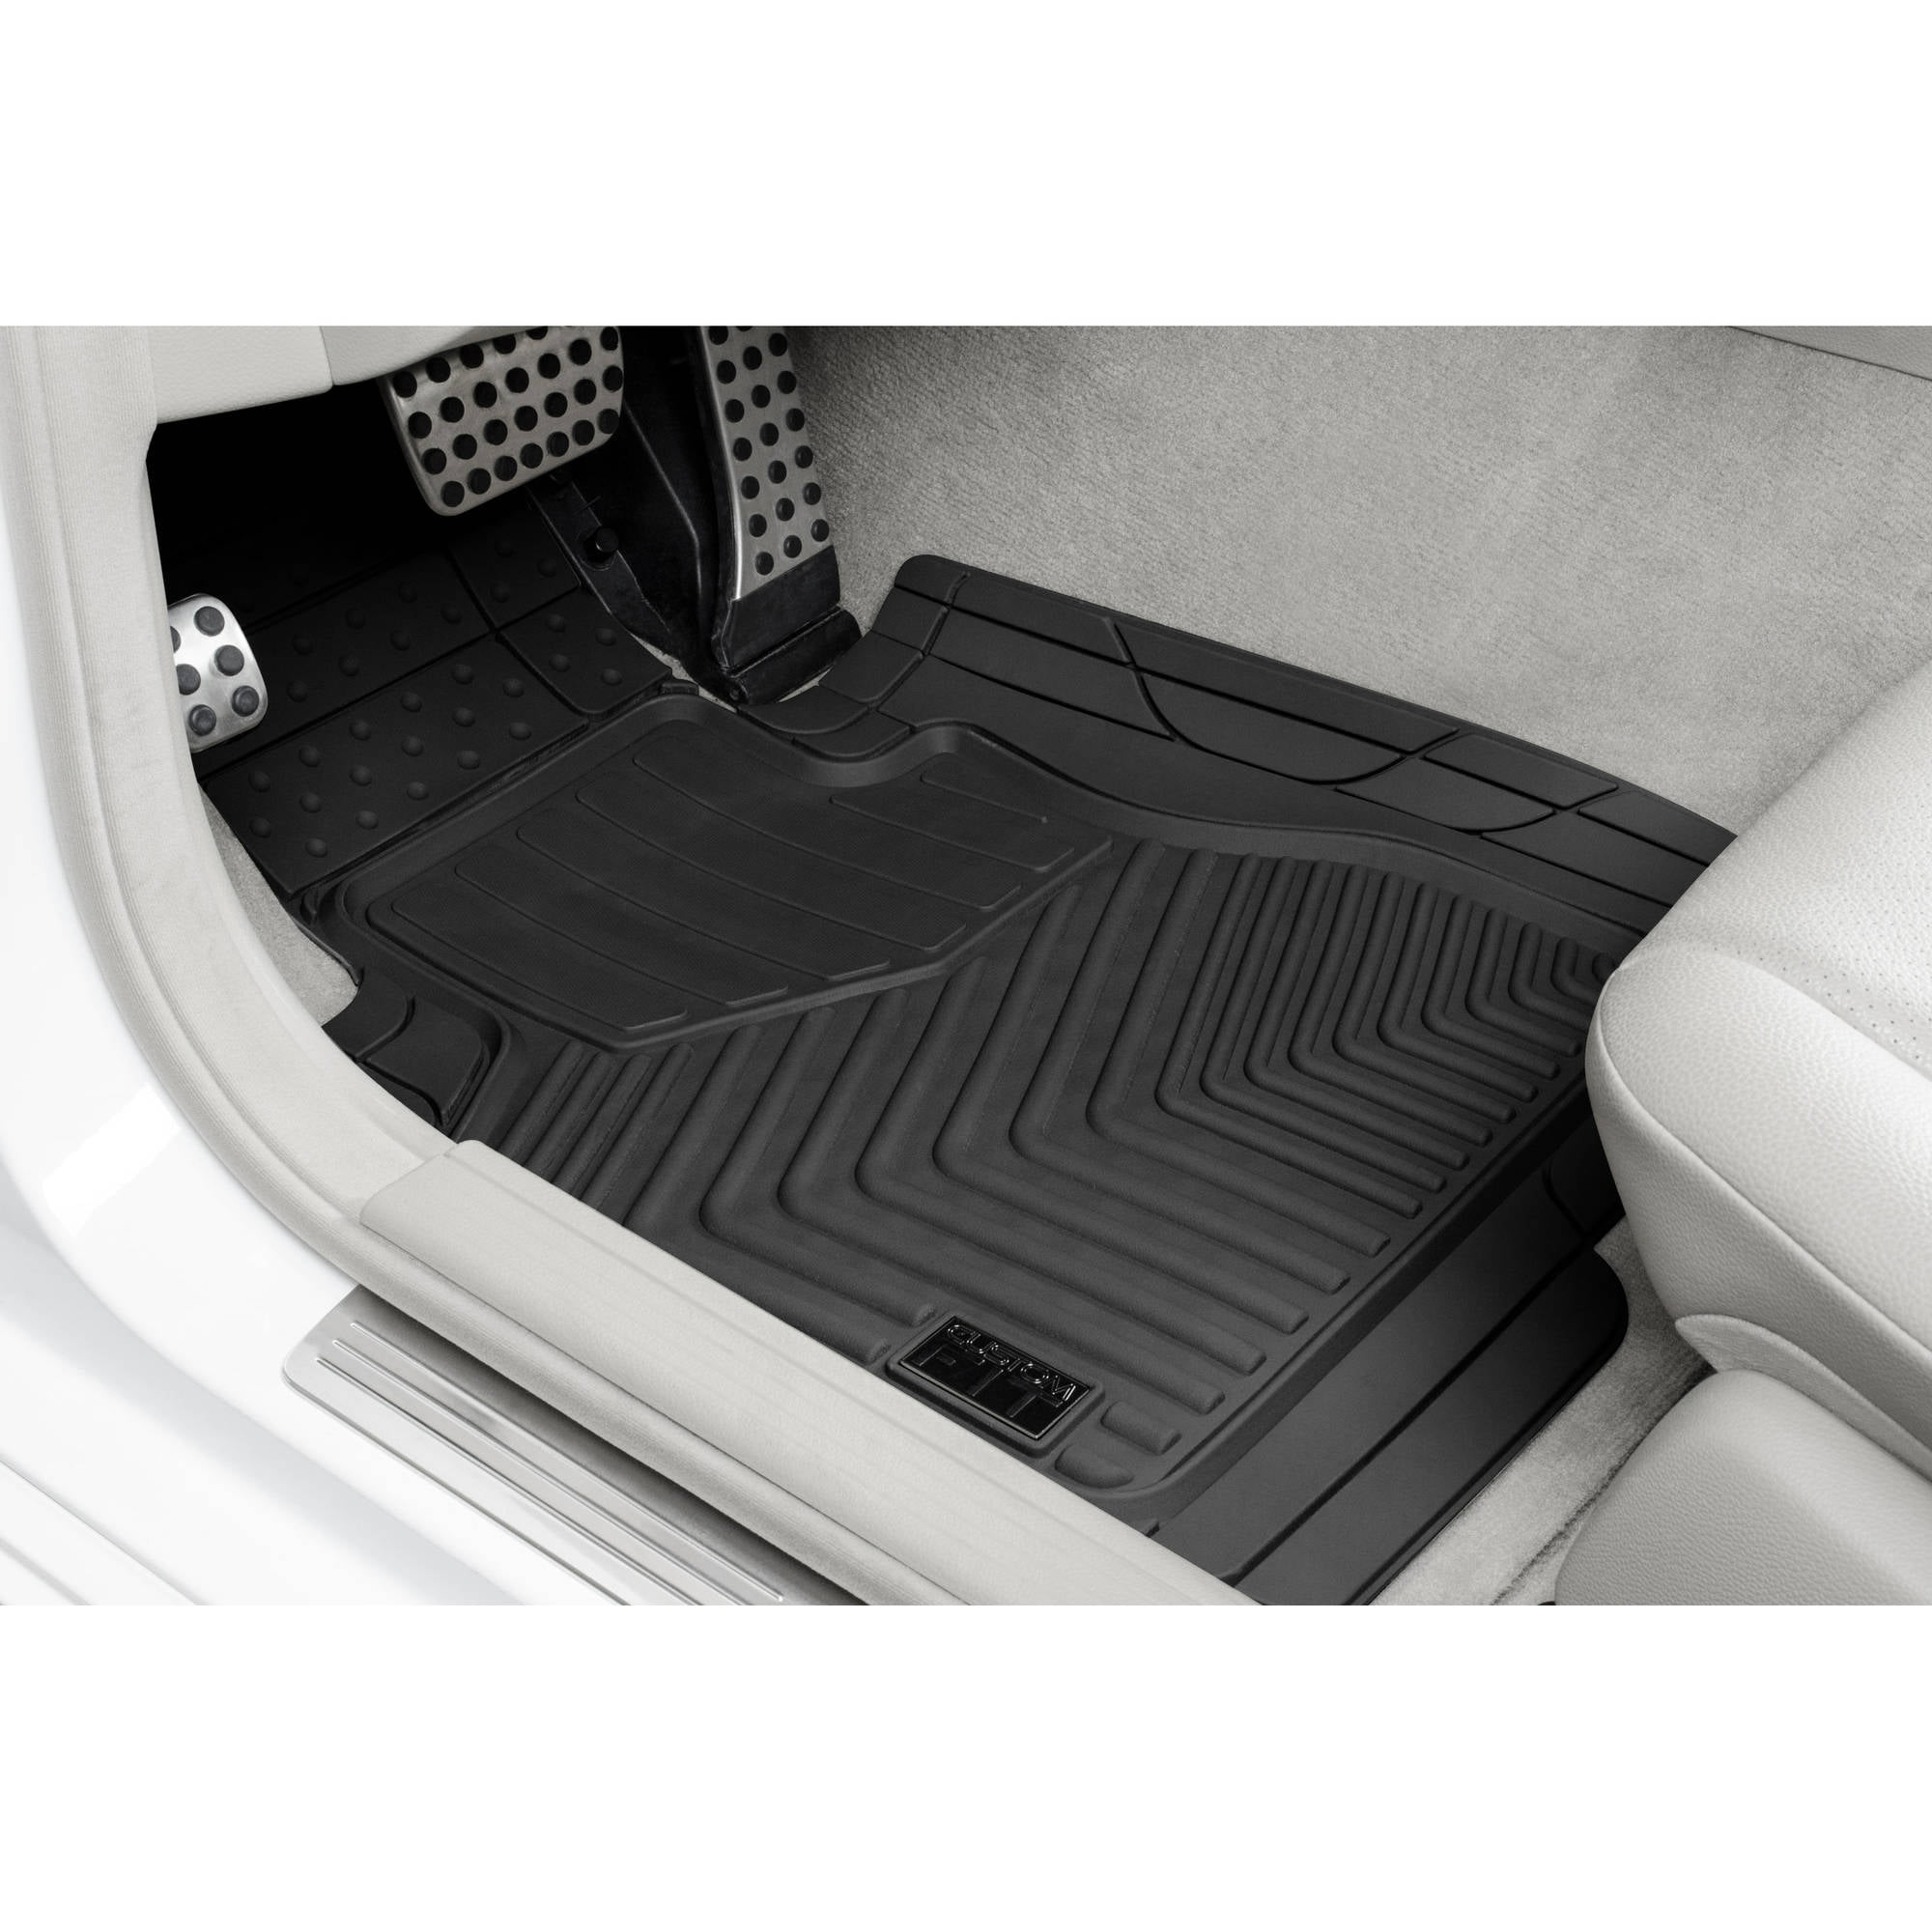  Sword and Shield Car Floor Mats 4 Piece Front & Rear Set Anti  Slip Foot Carpet Universal Fit for Most Car : Automotive